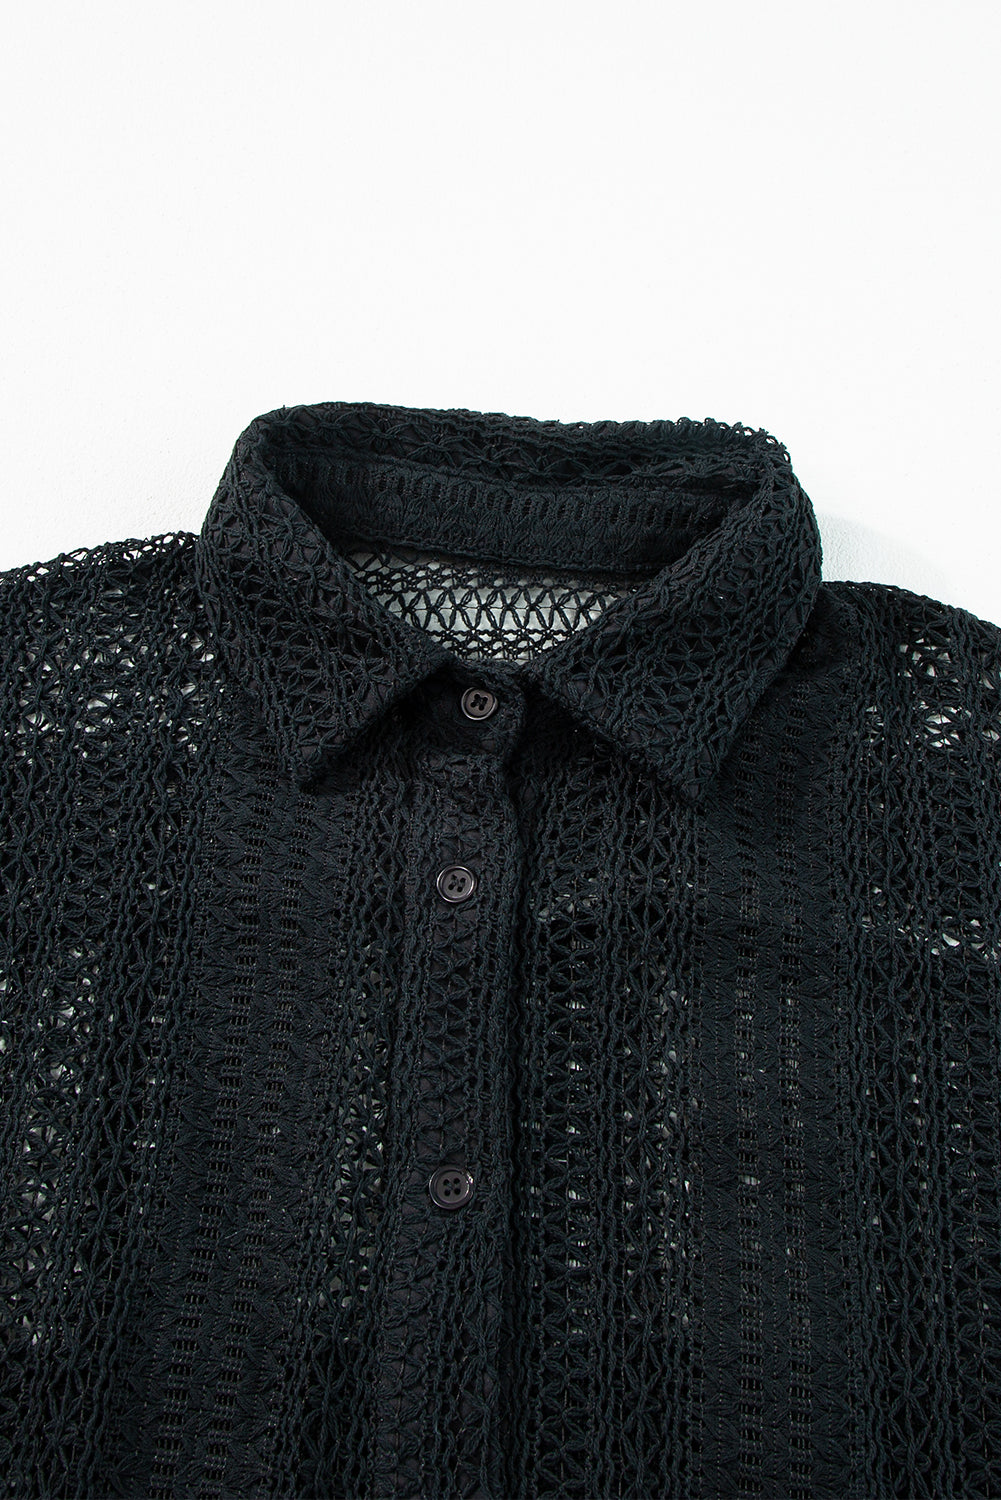 Lace Crochet Collared Tunic Oversized Shirt